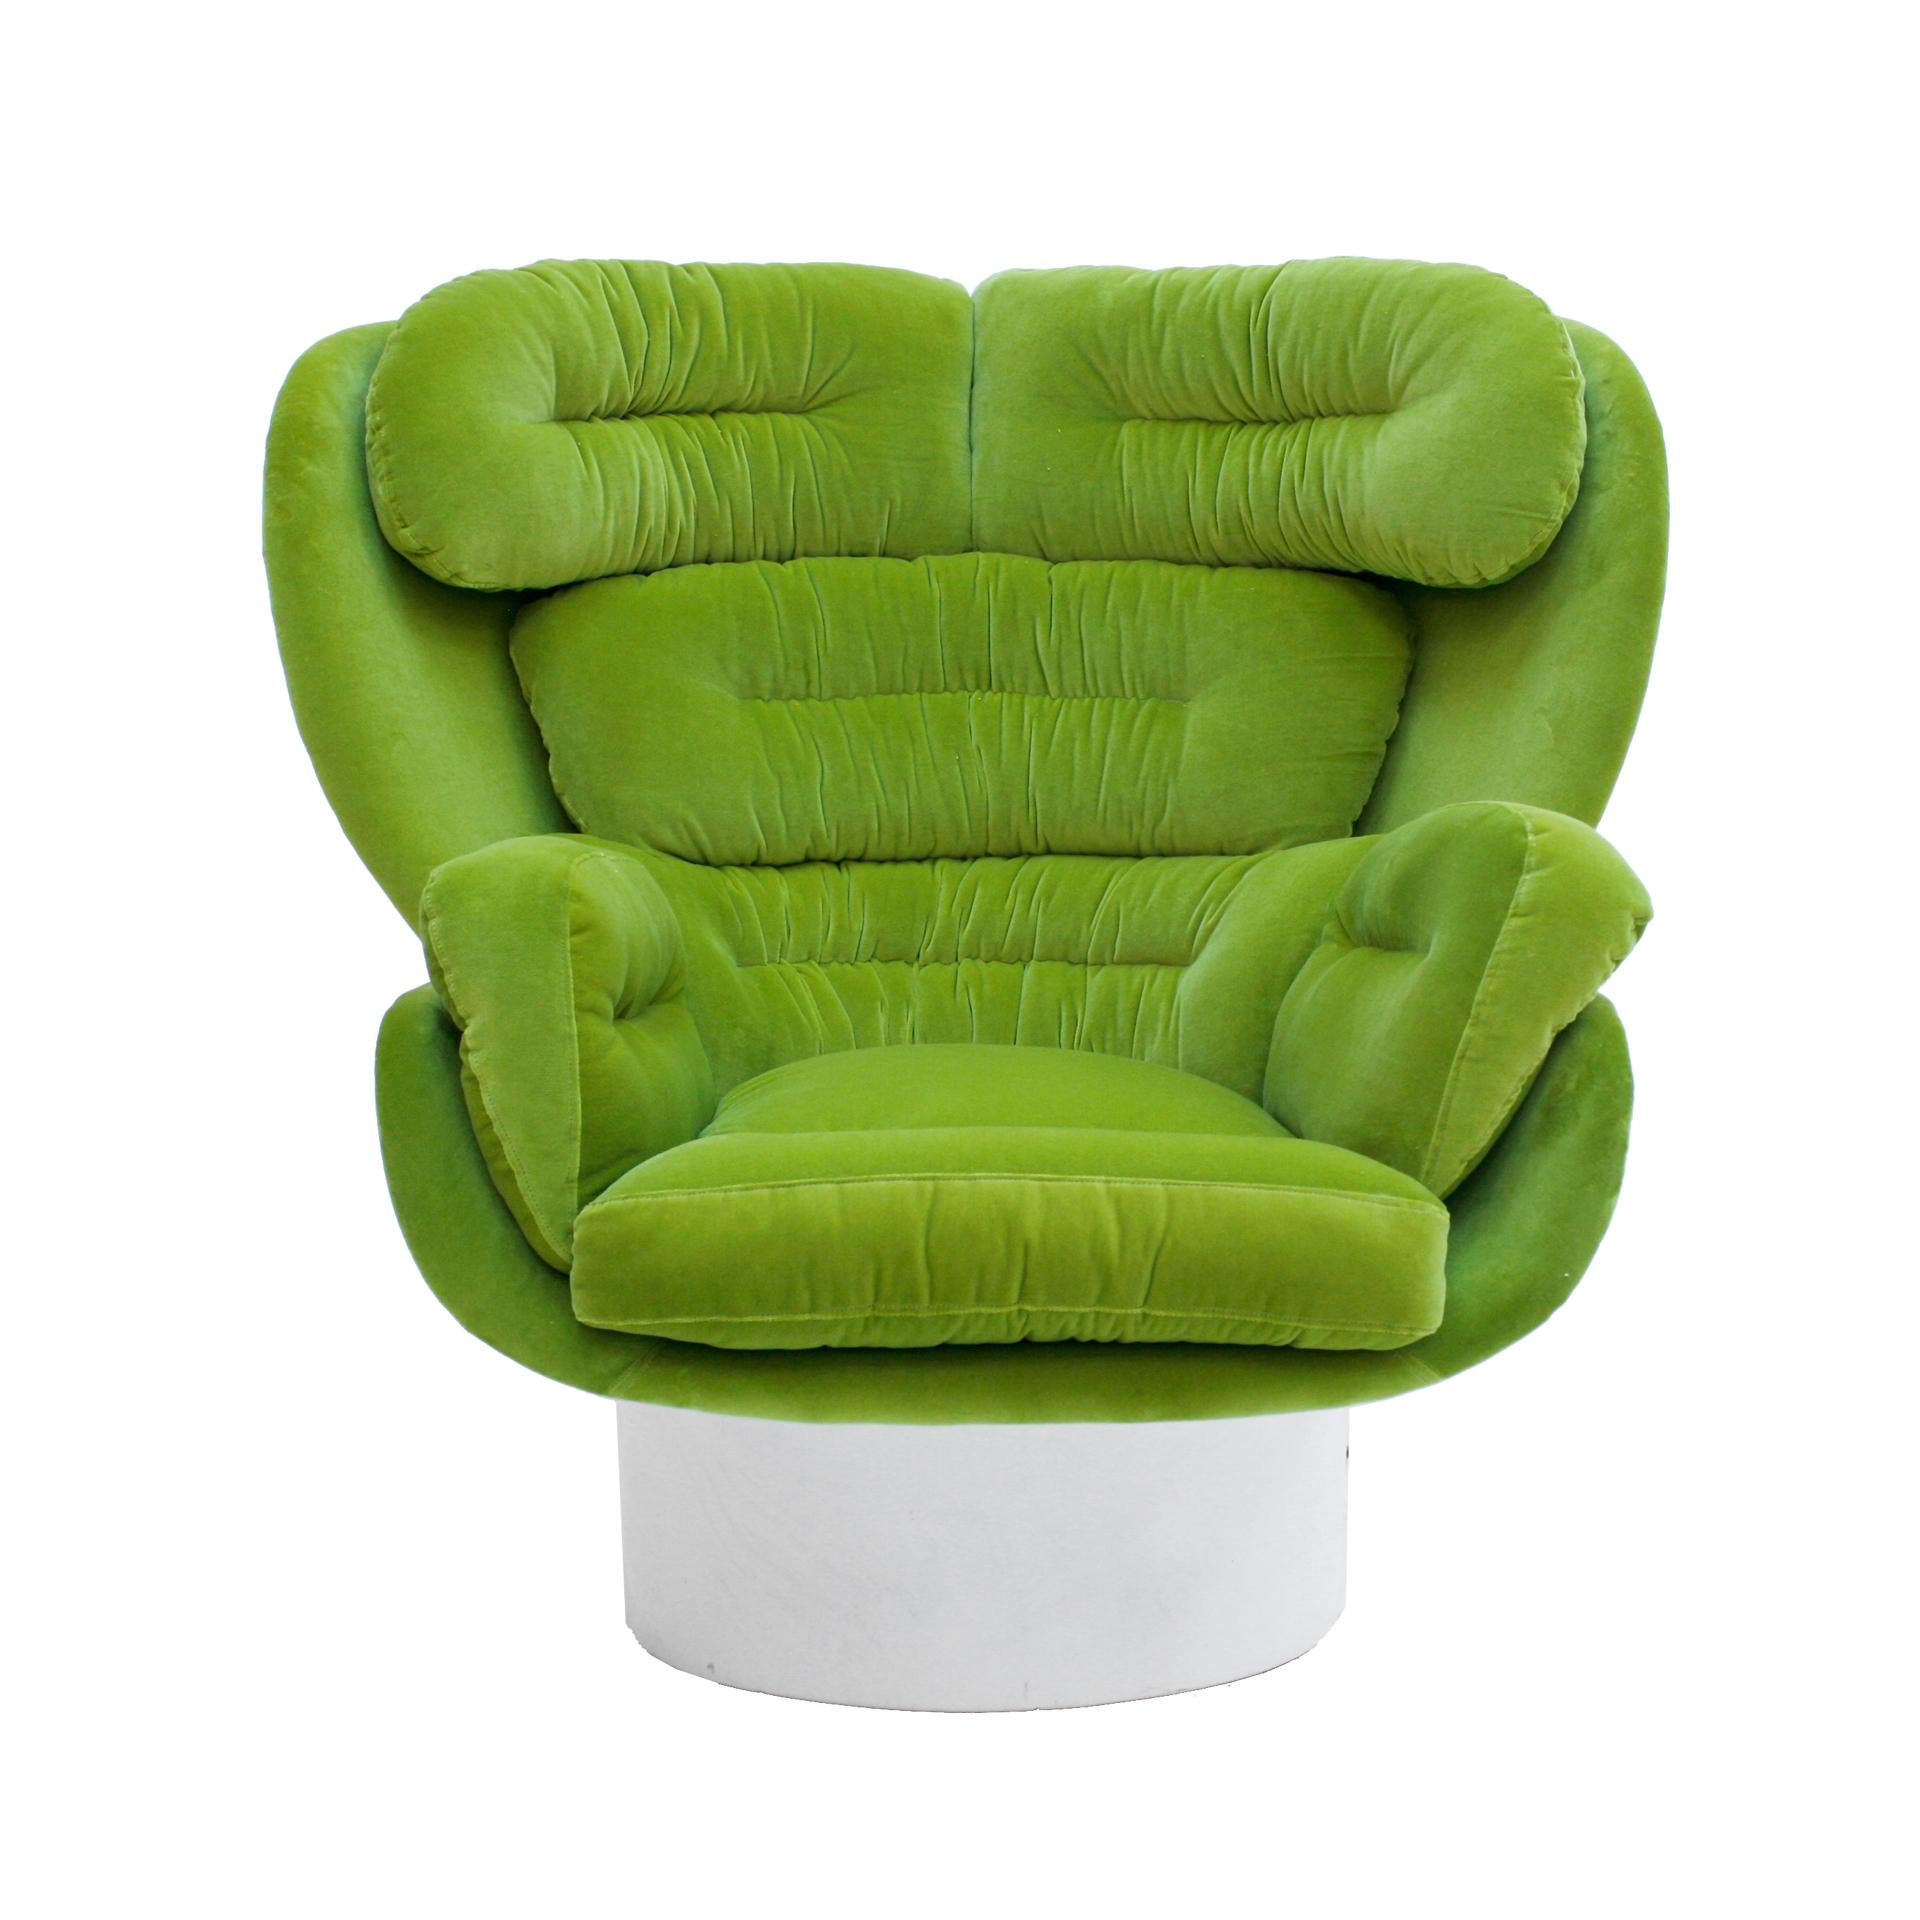 Lounge chair model 